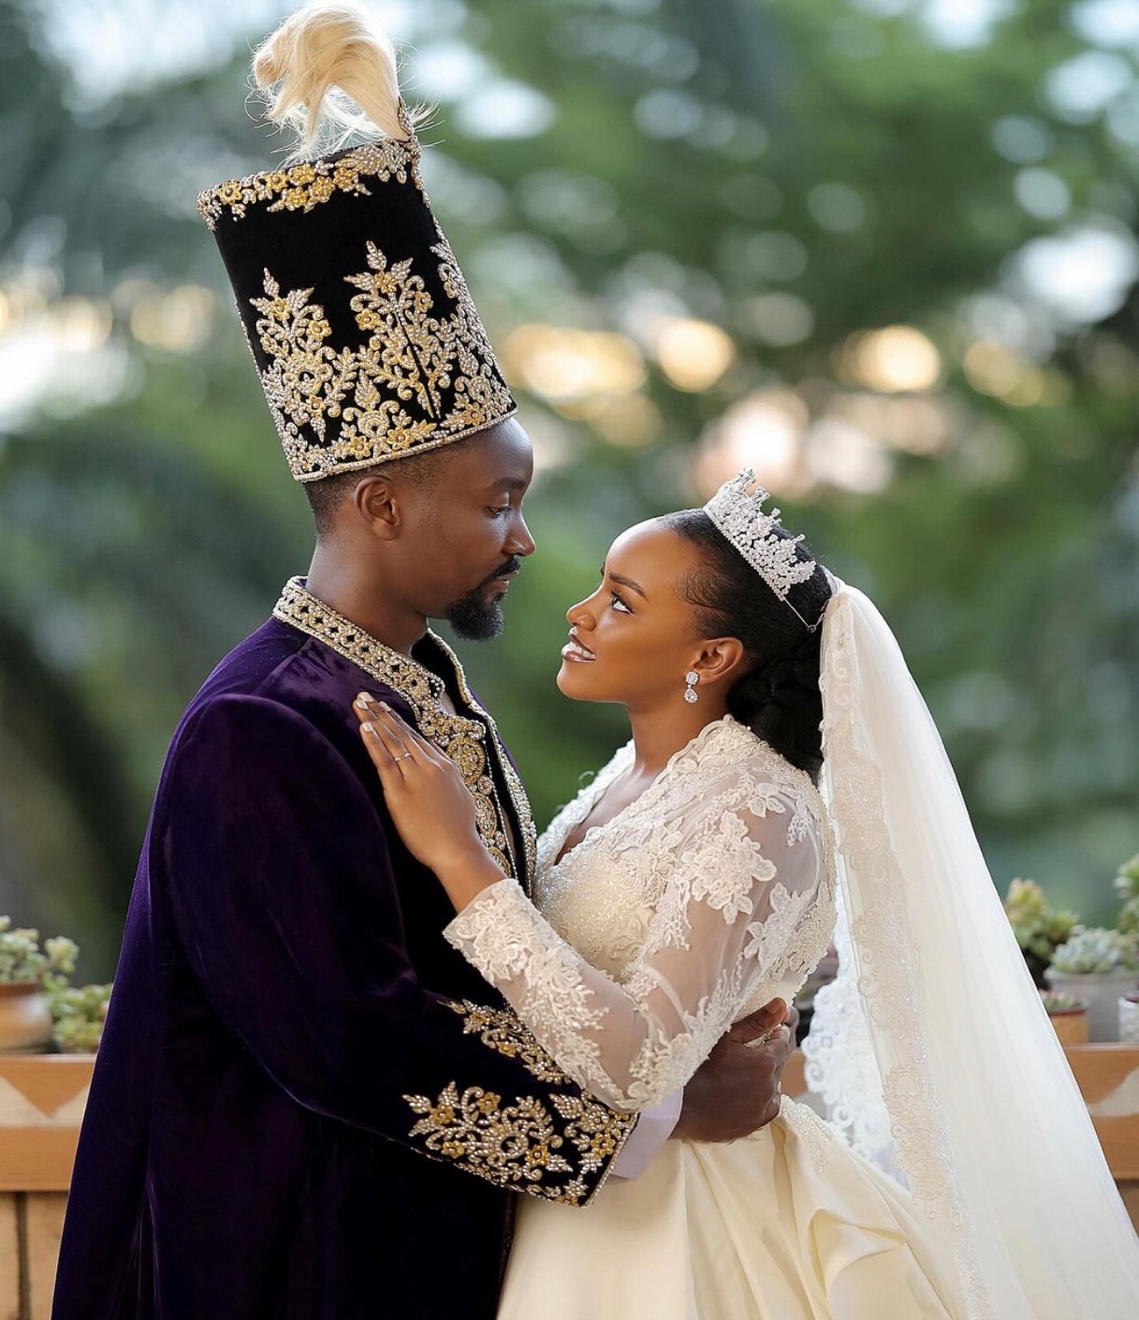 The Kyabazinga Wedding-A Celebration of Royalty and Splendor. (The Church Ceremony)